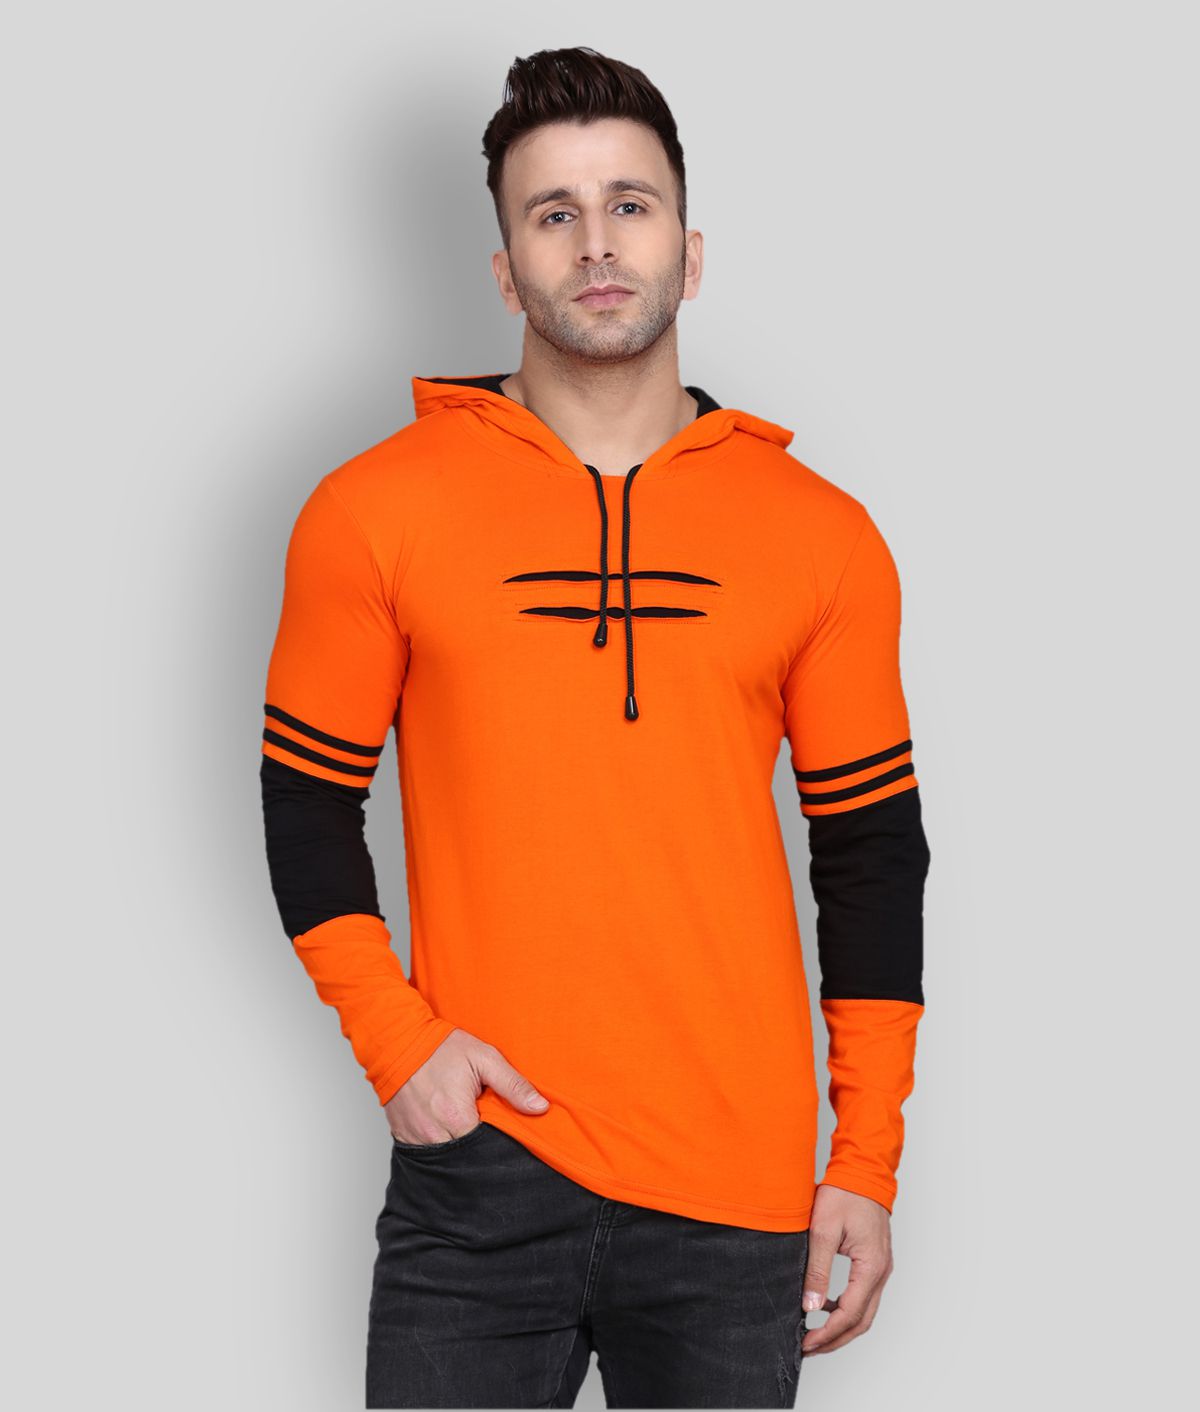 SIDKRT - Orange Cotton Regular Fit Men's T-Shirt ( Pack of 1 )